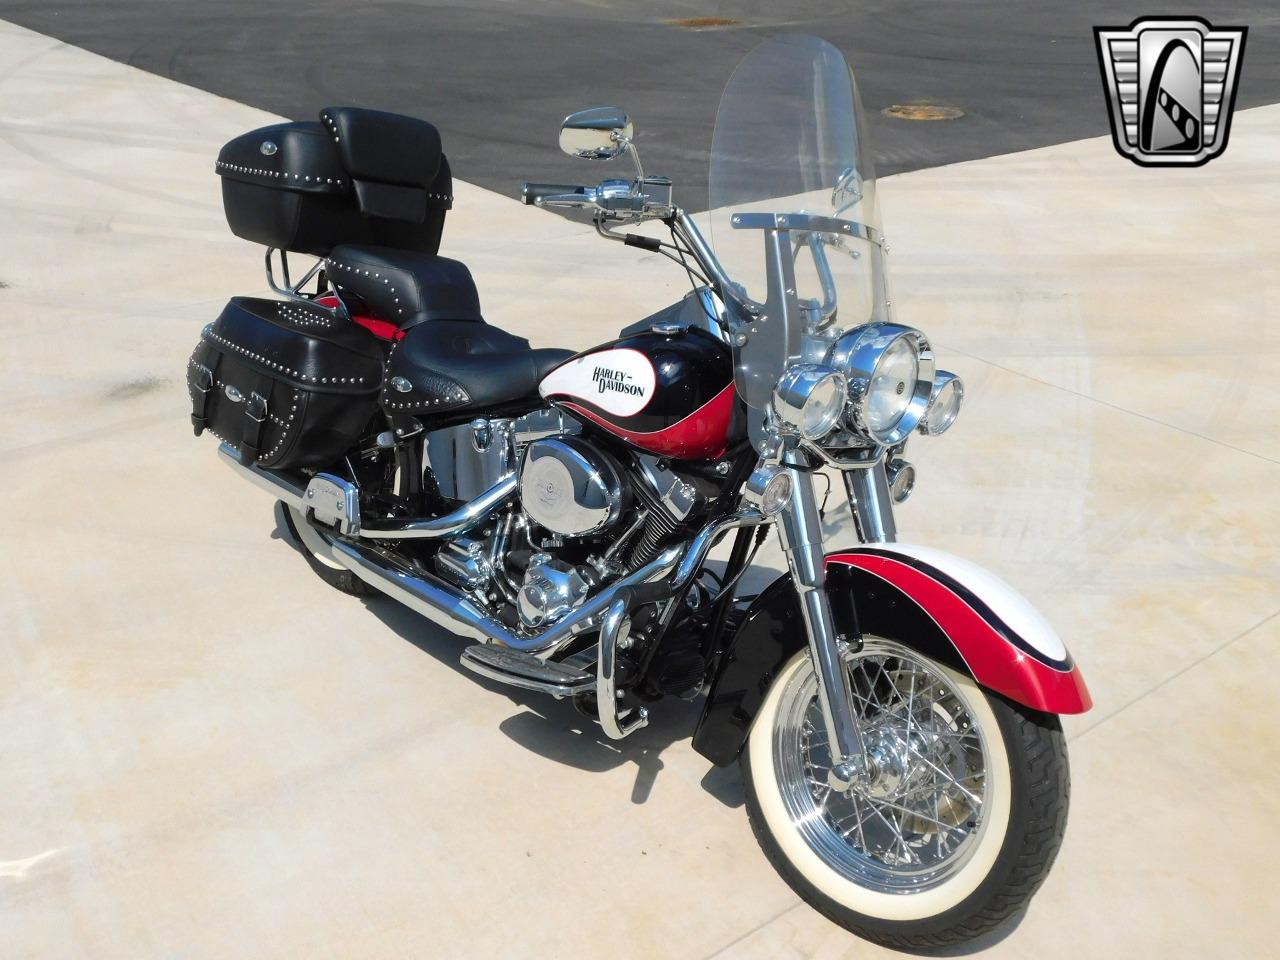 2007 Harley Davidson FLSTCI